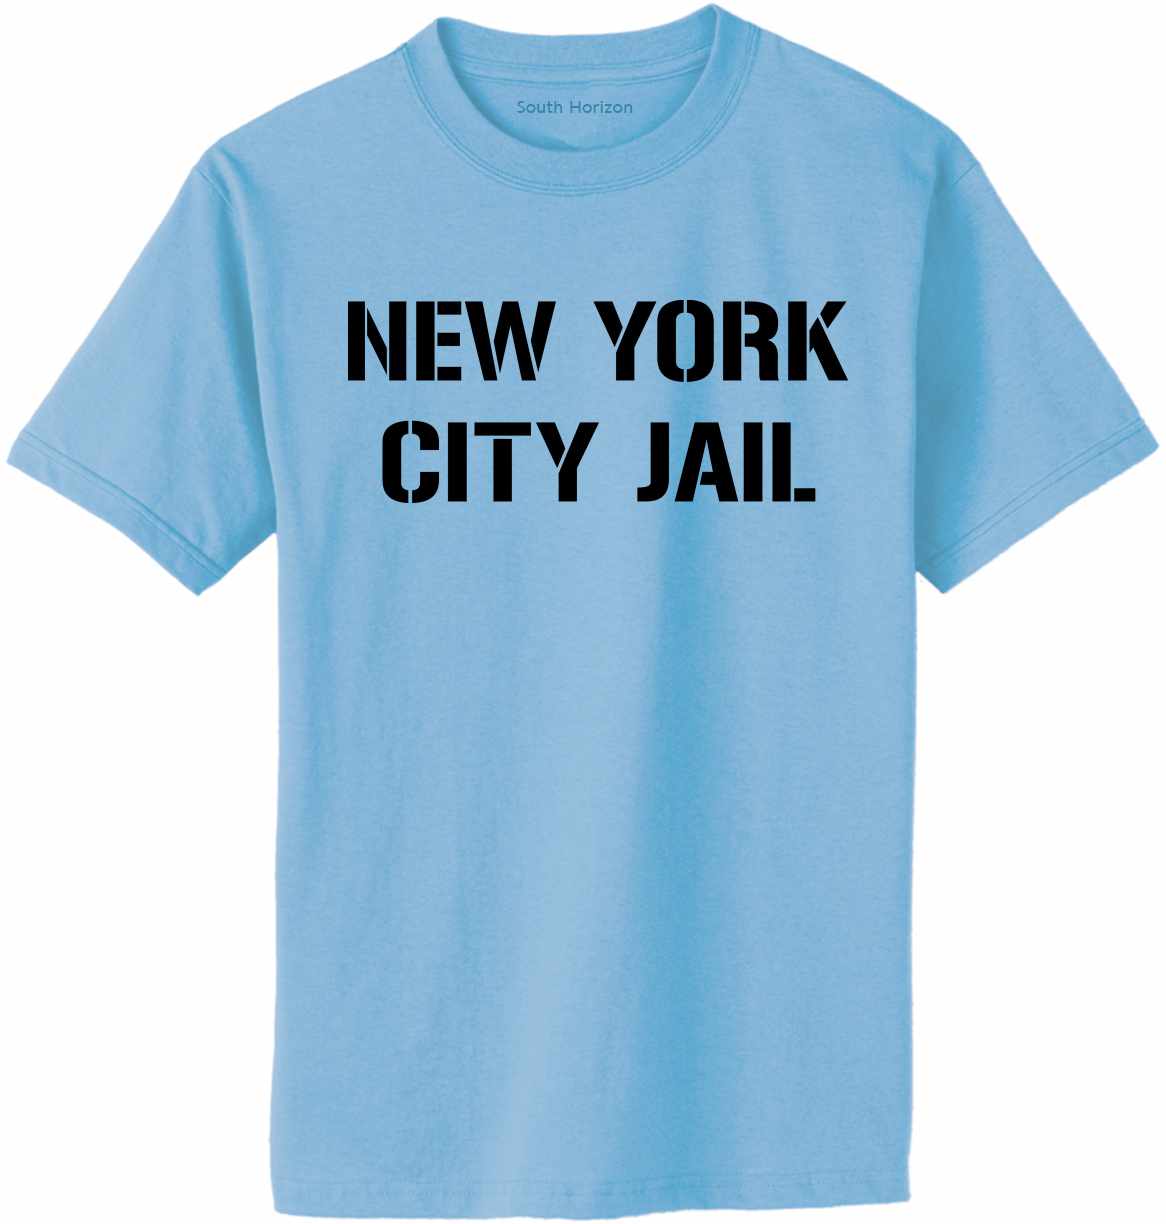 NEW YORK CITY JAIL Adult T-Shirt (#445-1)